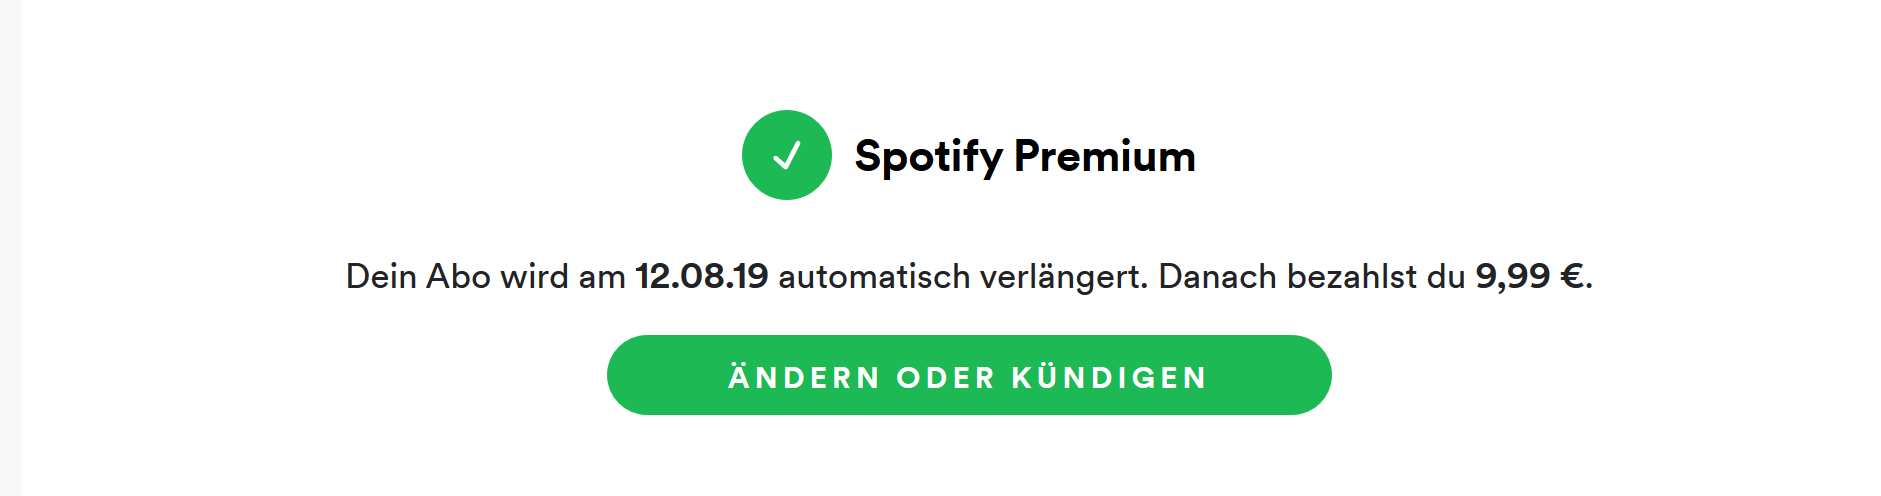 Spotify Premium nicht in der Android App erkannt - The Spotify Community